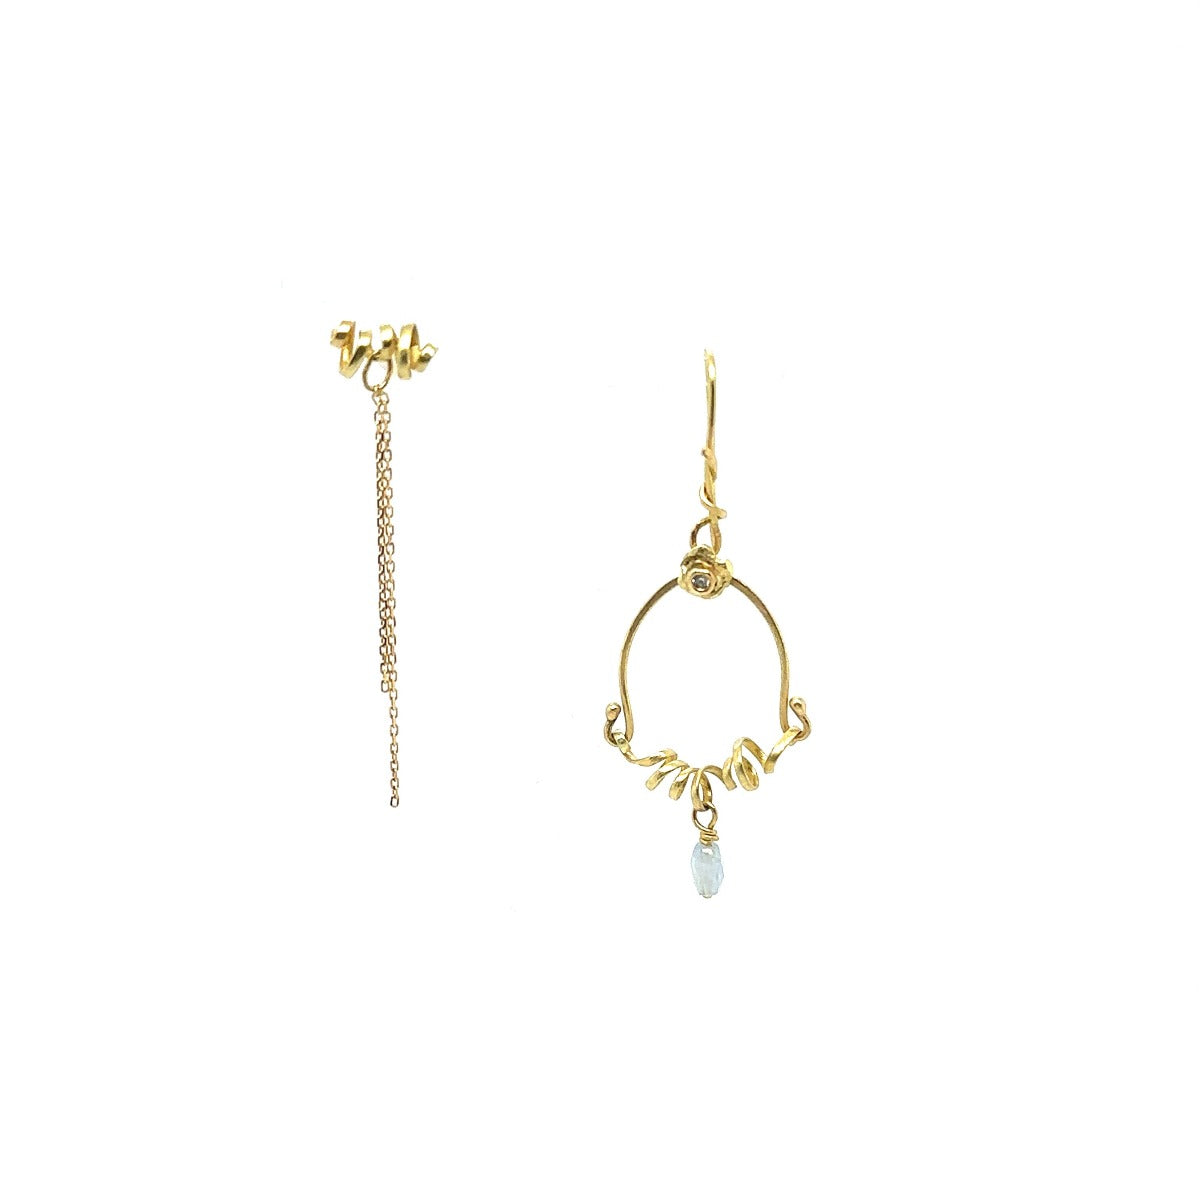 Flair earring in 18 ct. gold. Light blue sapphire & diamond